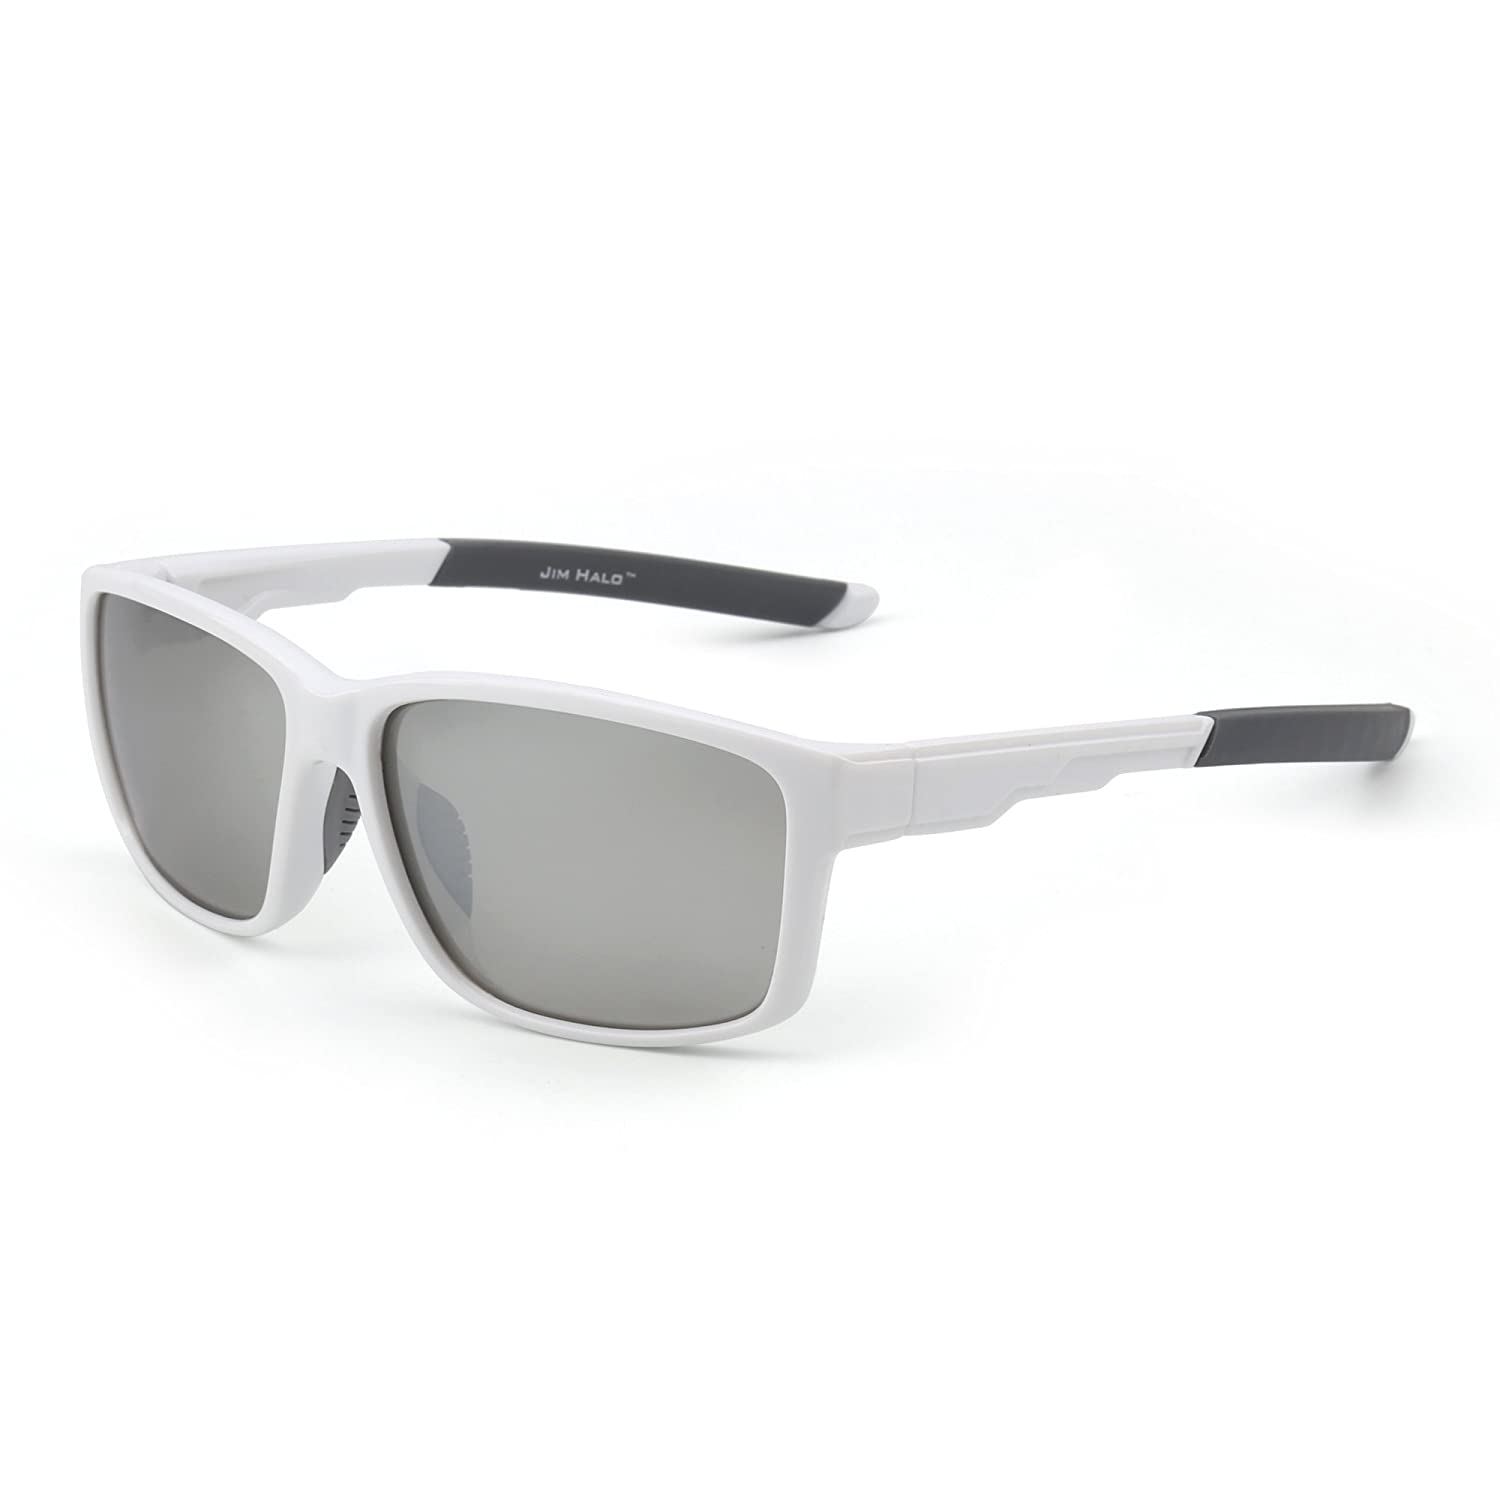 White Polarized Driving Sports Sunglasses for Men